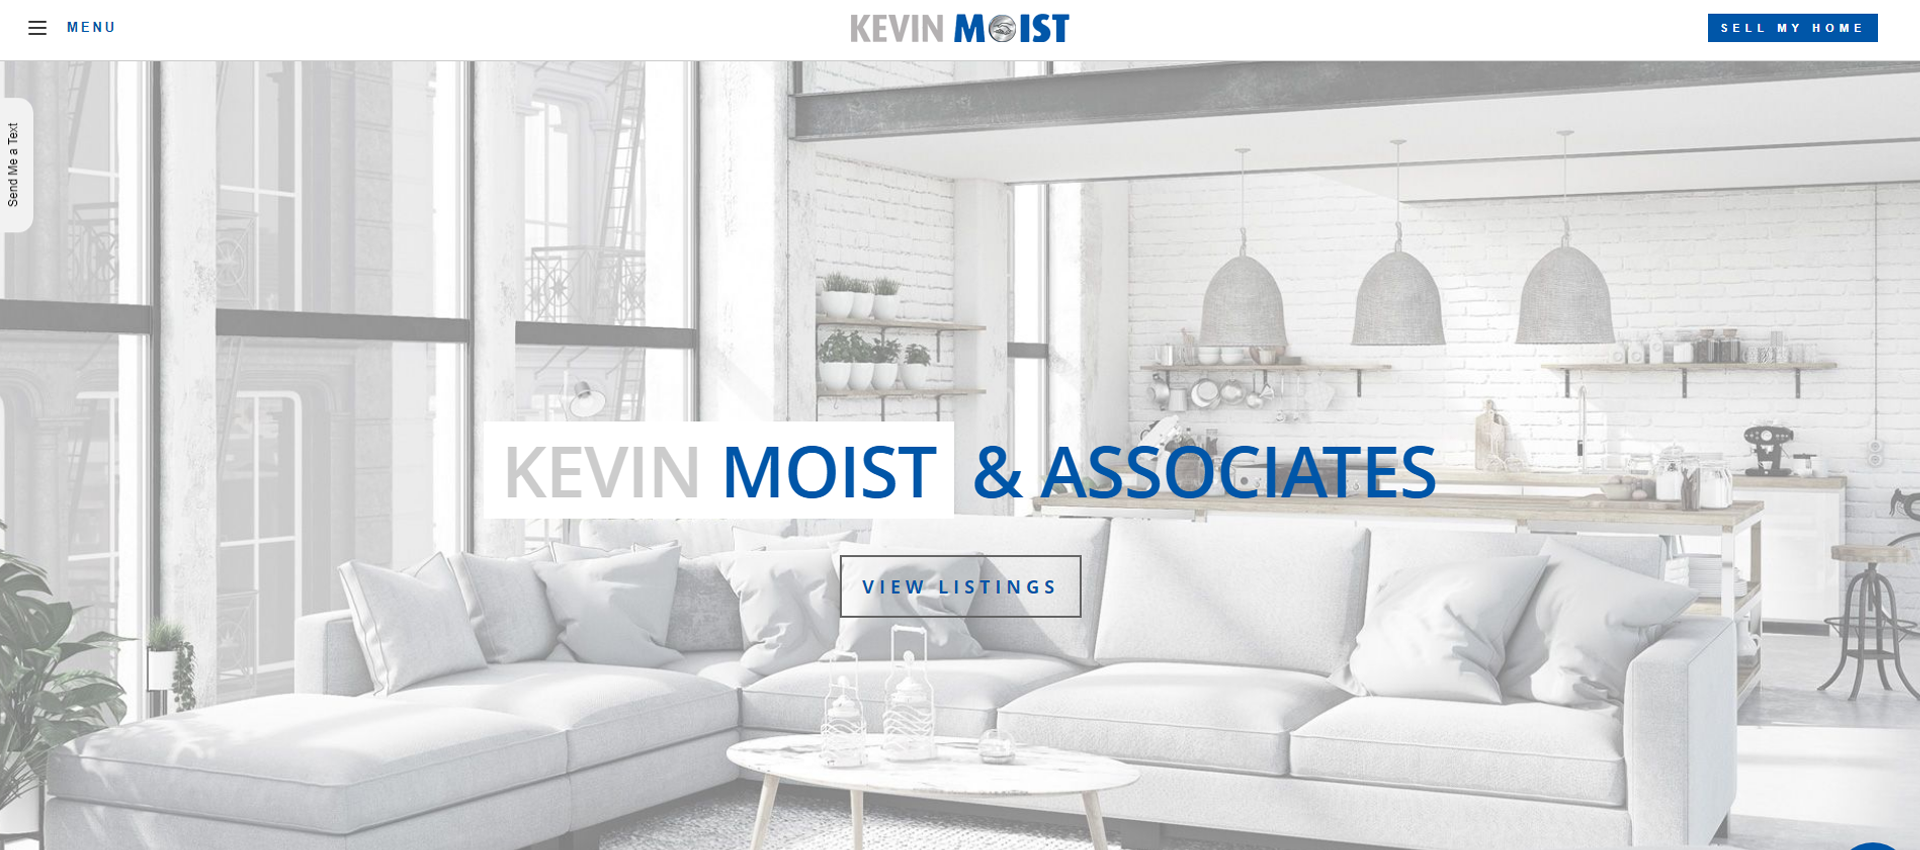 Kevin Moist & Associates